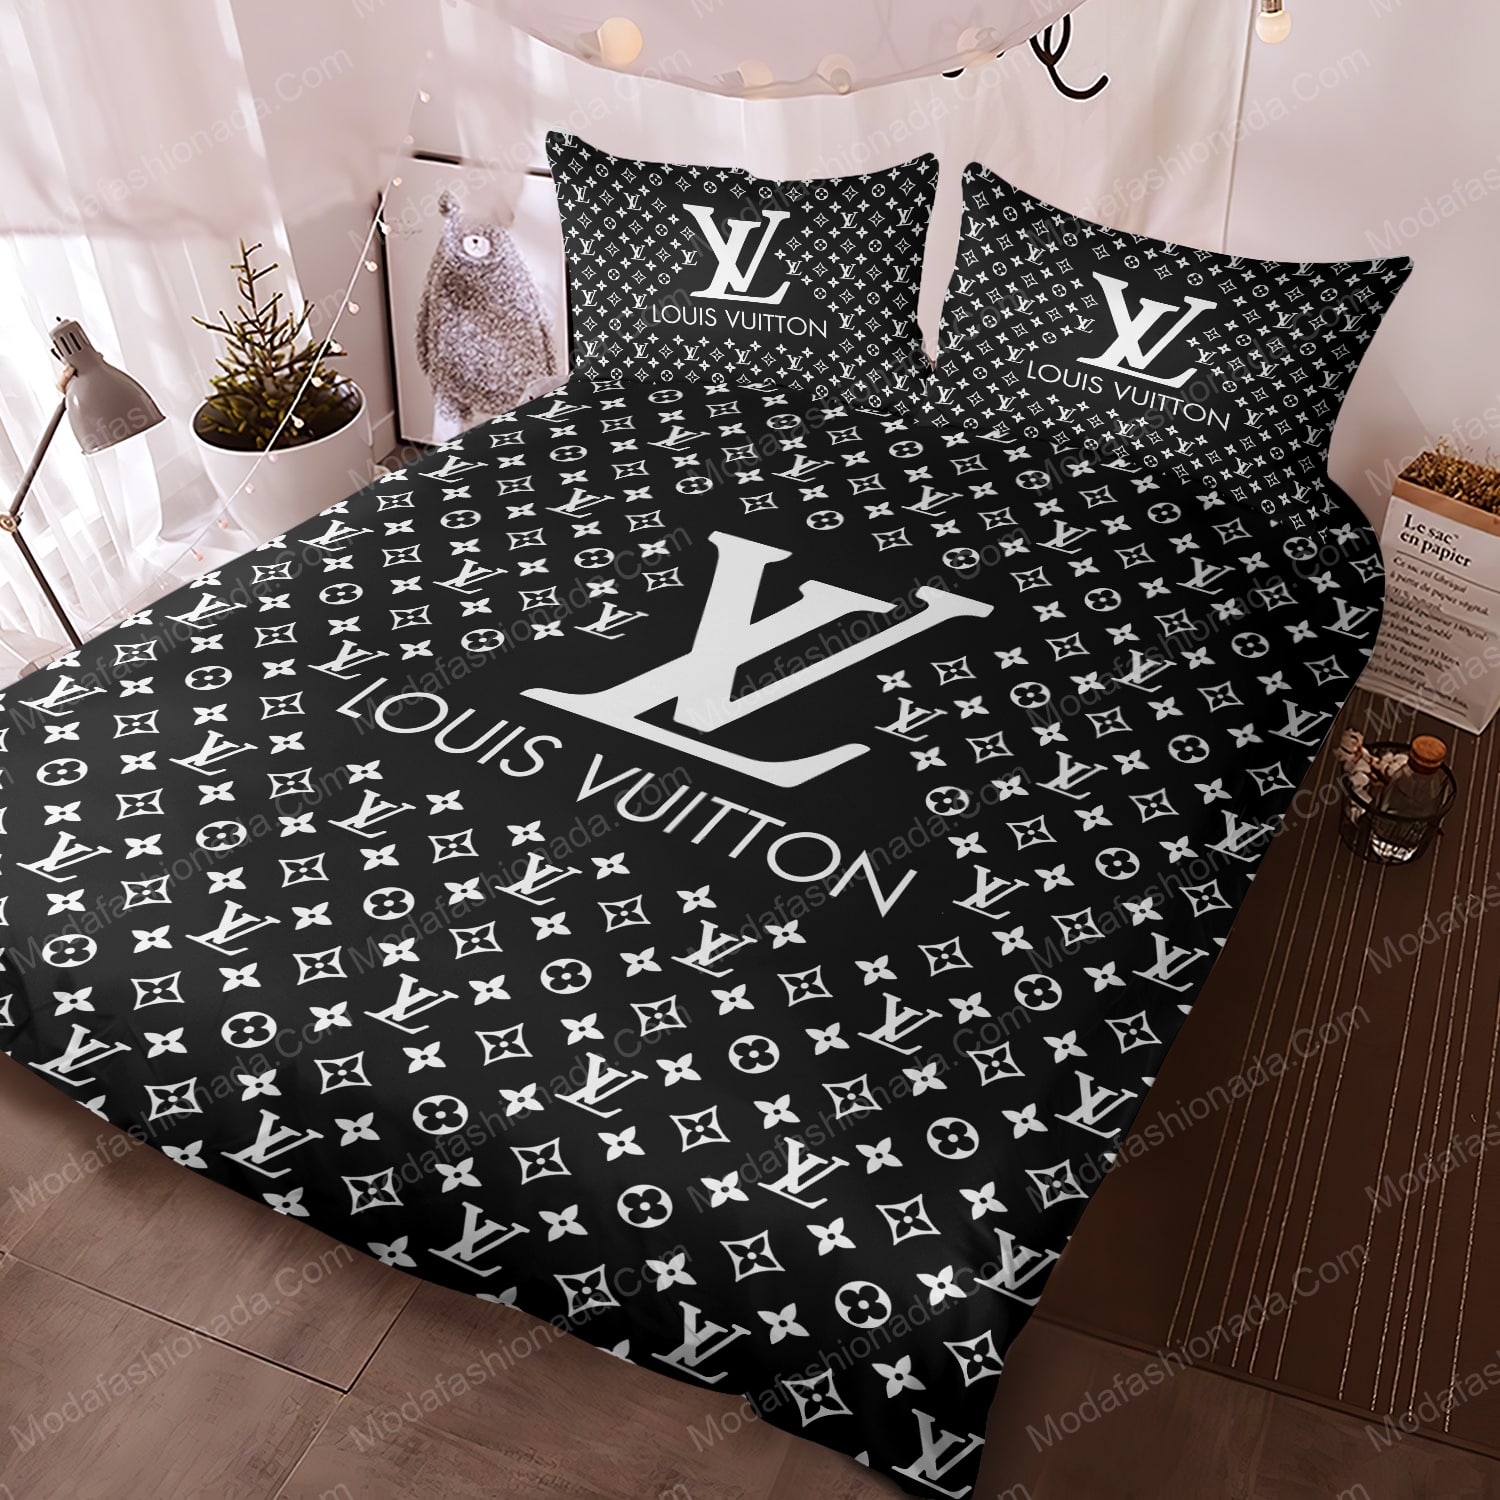 Louis Vuitton Hot Luxury Brand Bedding Set Bedspread Duvet Cover Set Home  Decor  ベッドセット, 寝室インテリアのアイデア, 布団カバーセット